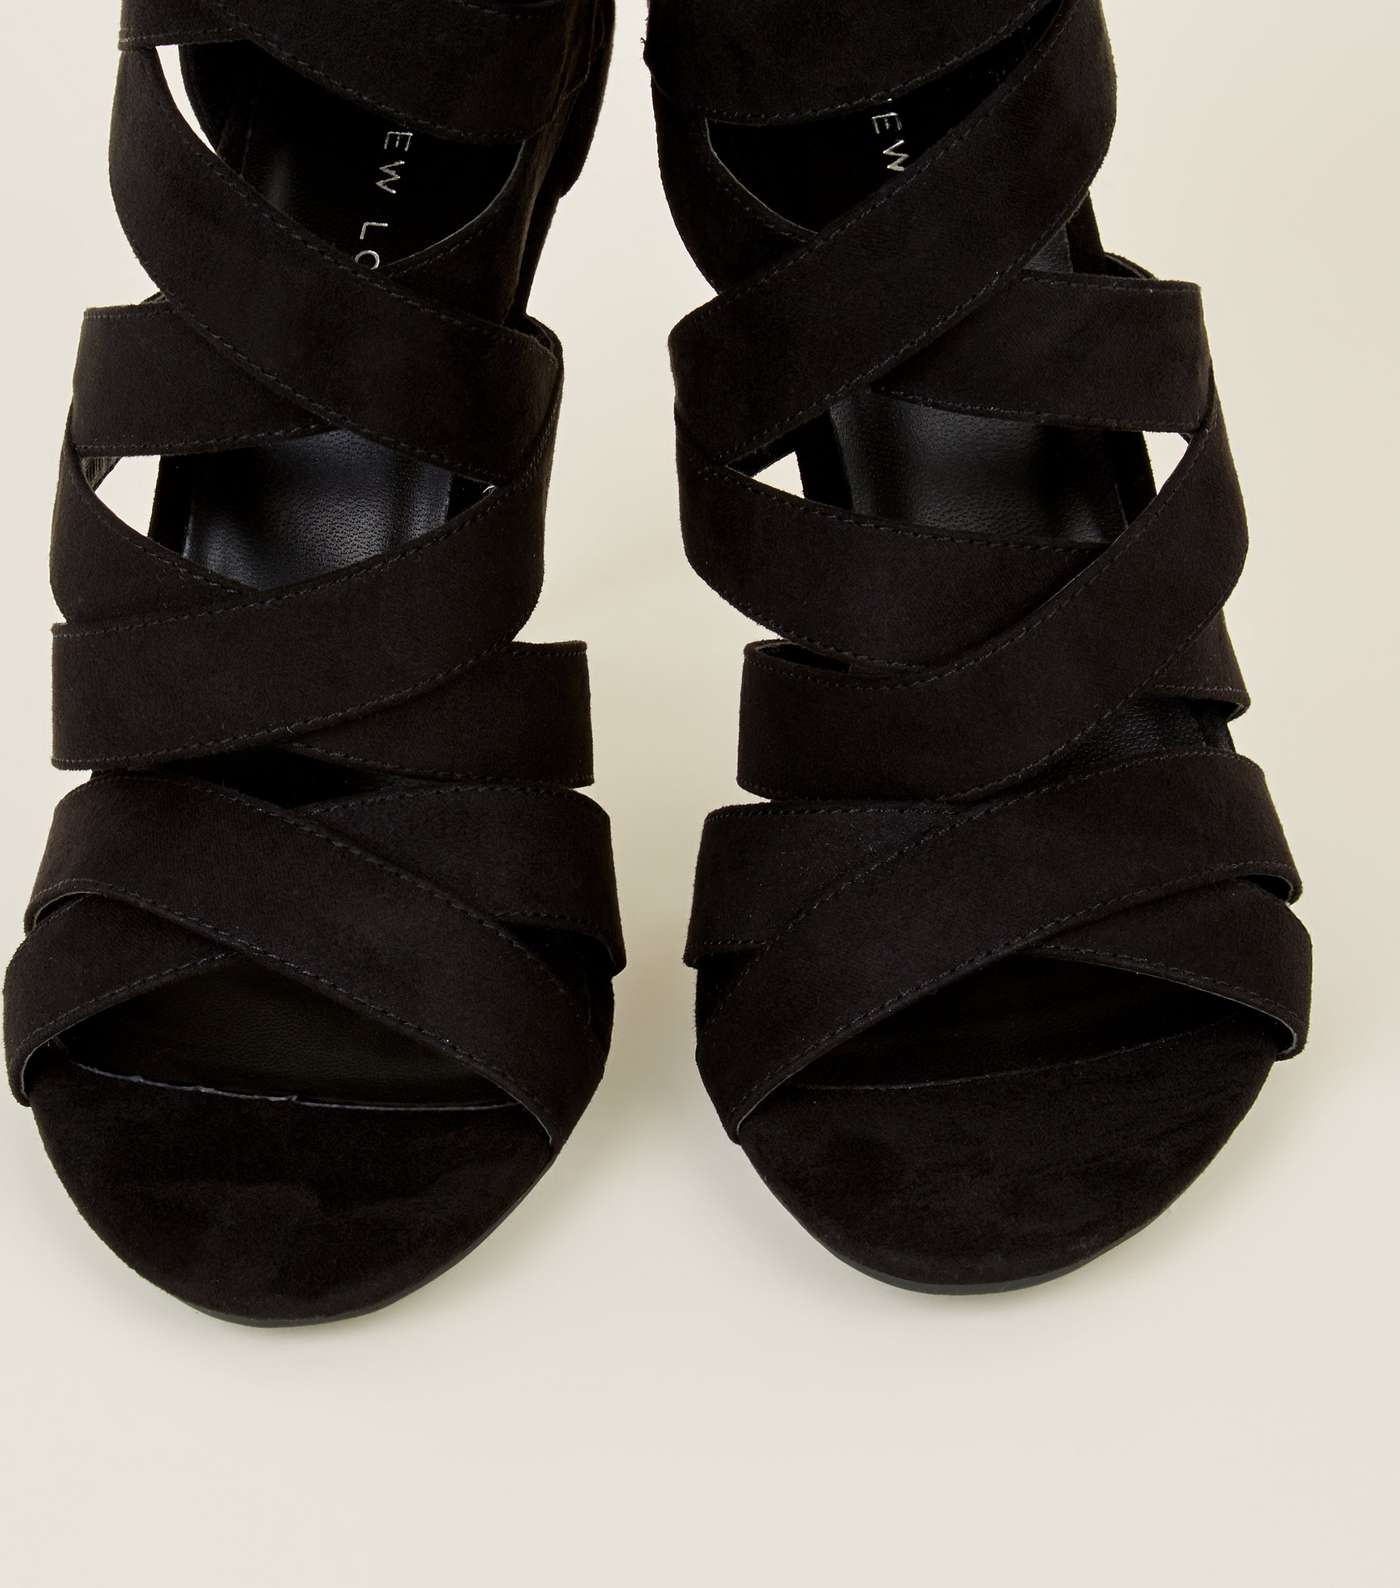 Black Strappy Suedette Stiletto Heels Shoes Image 3